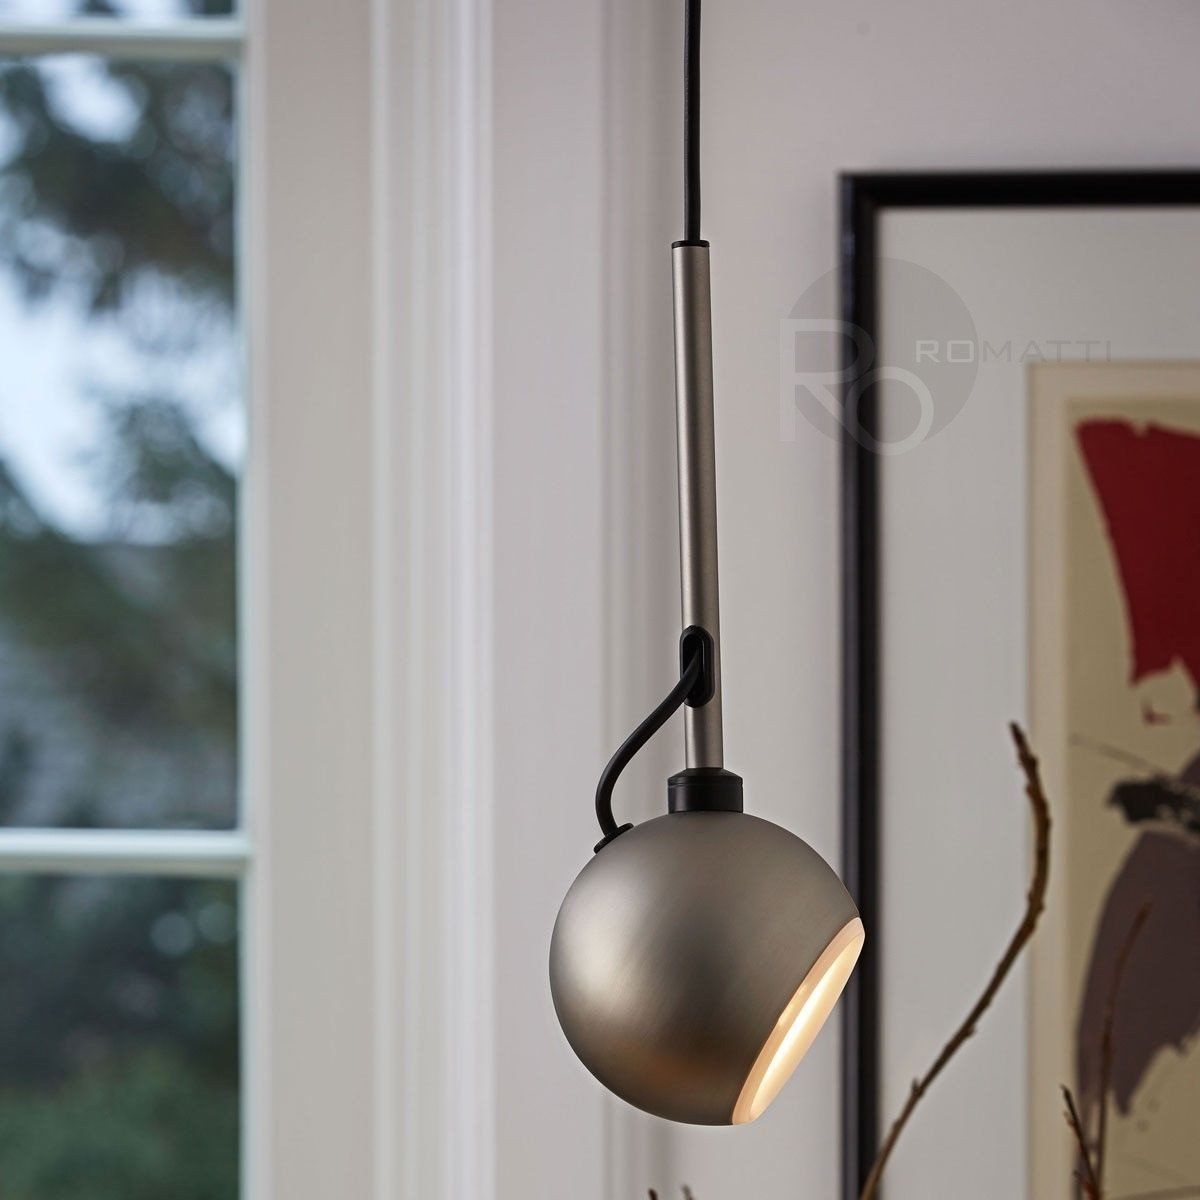 Hanging lamp Barbara by Romatti